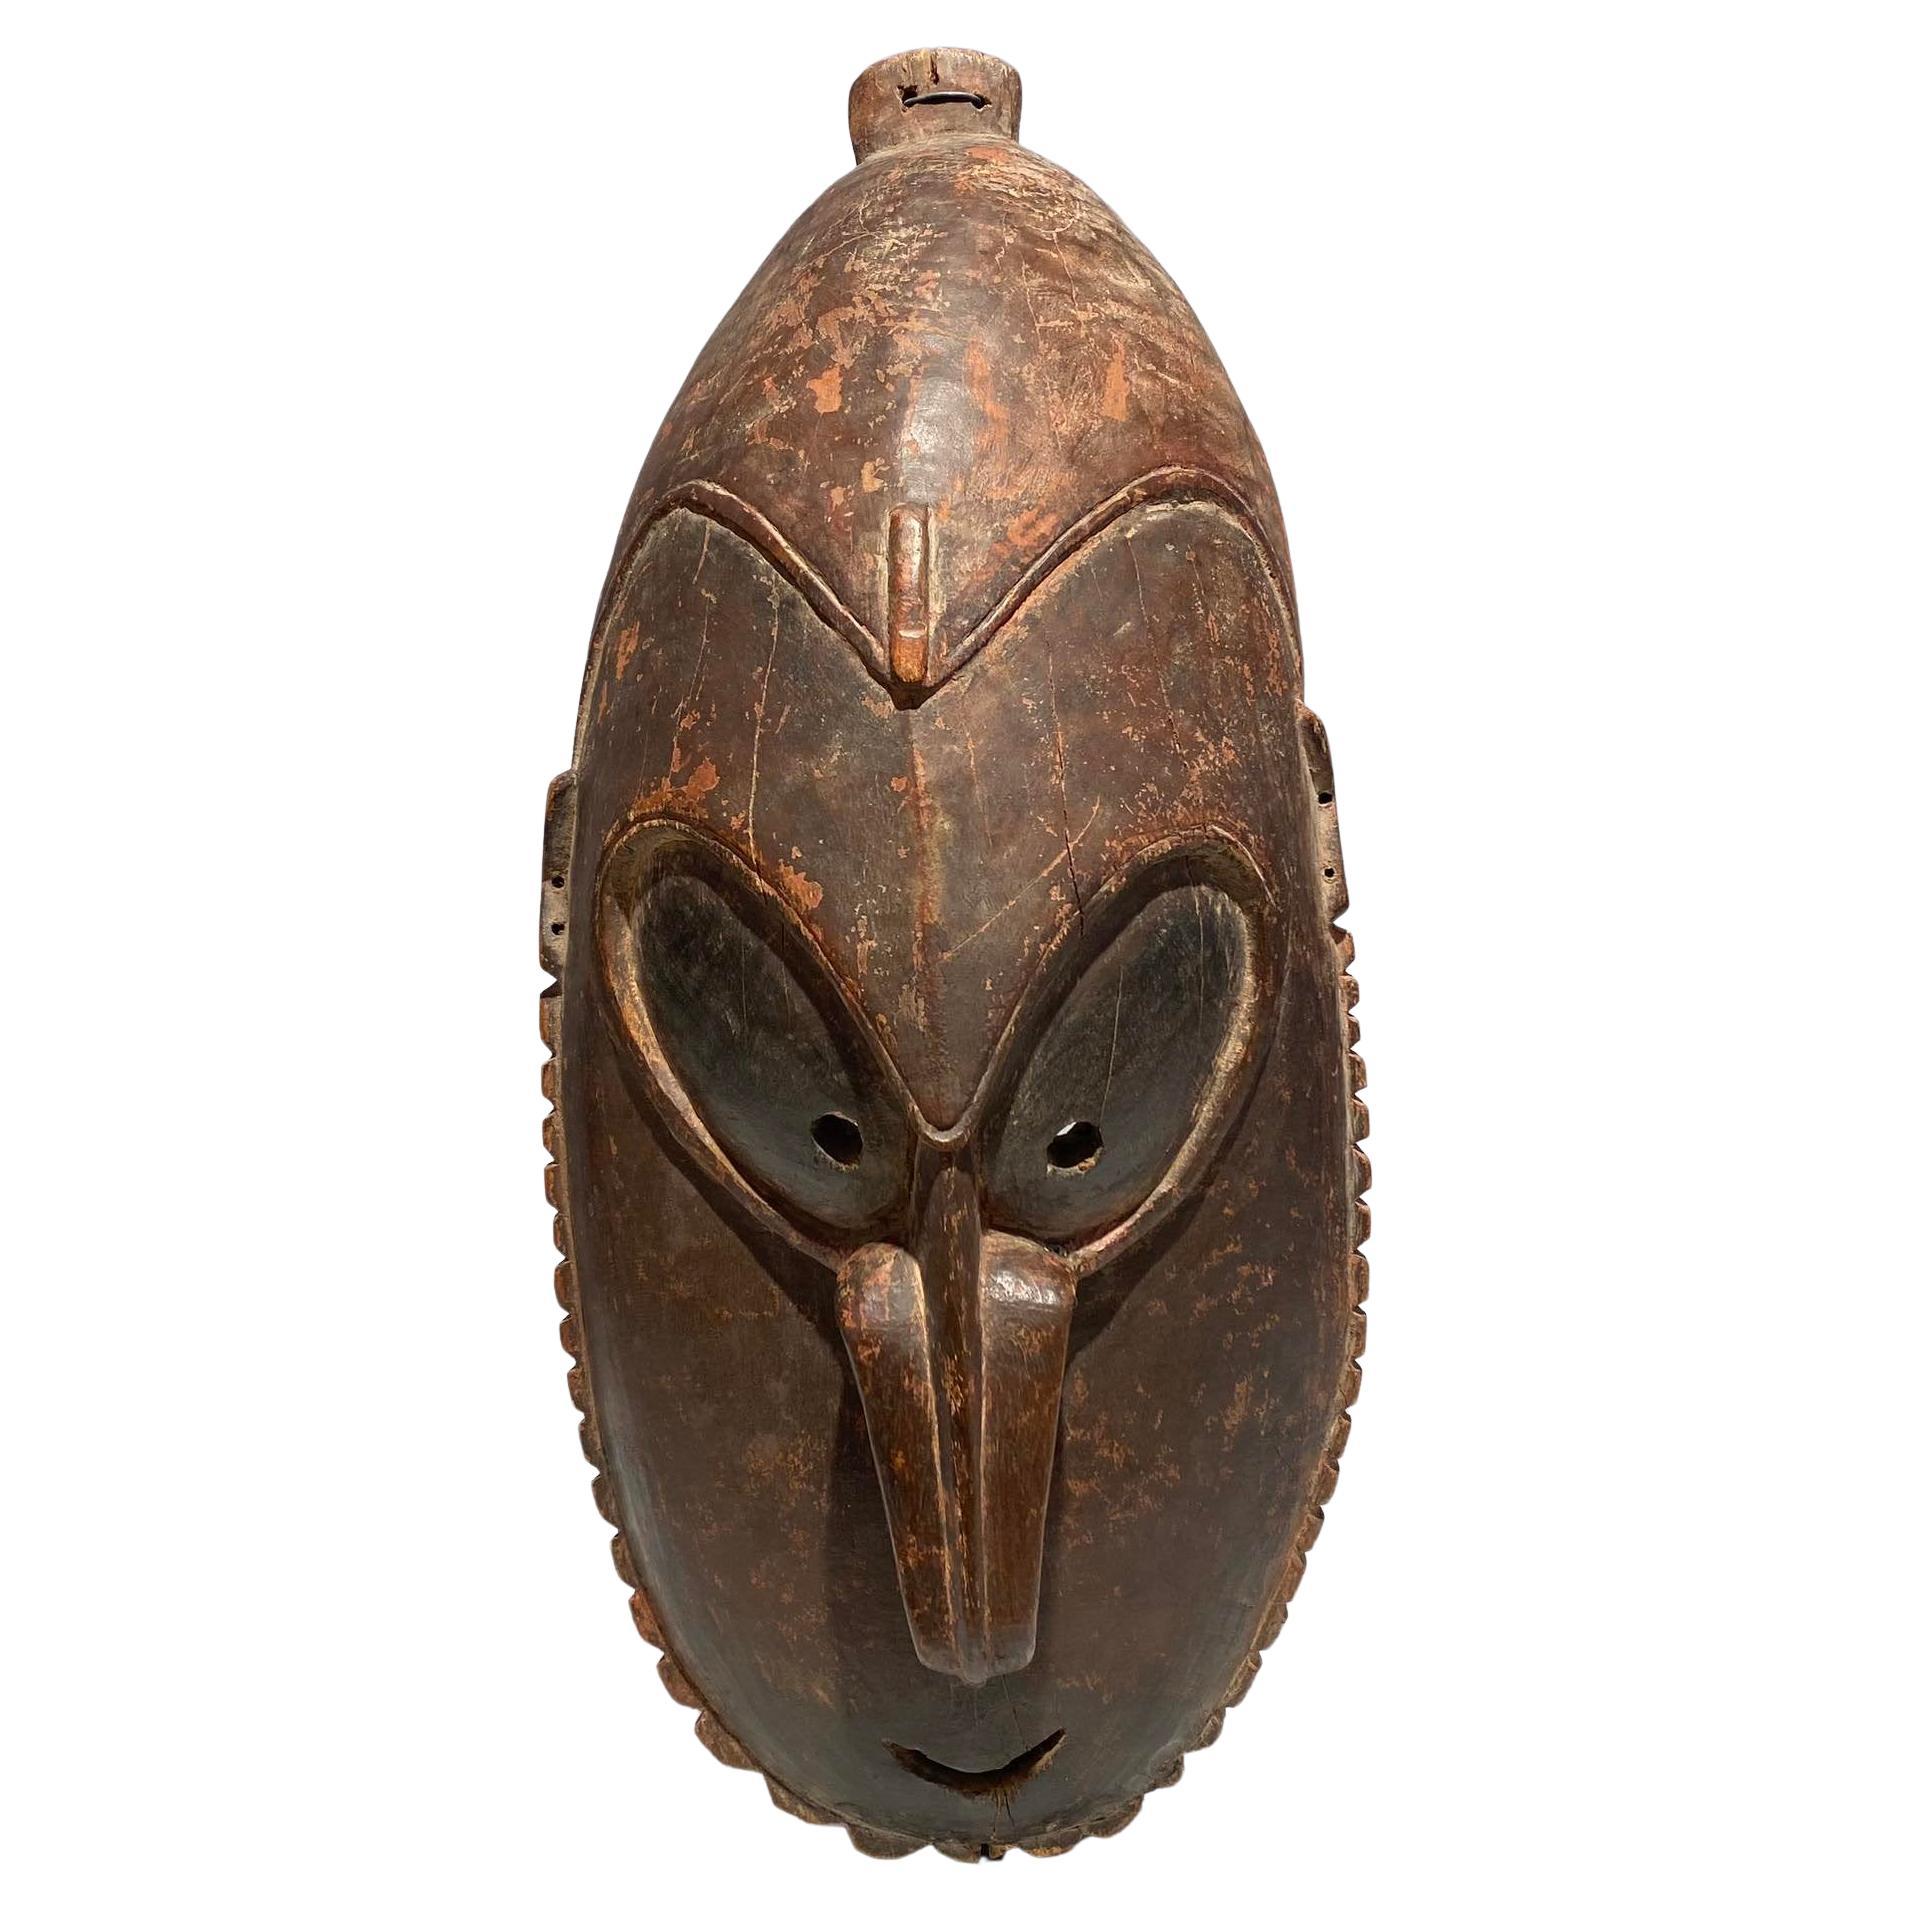 Antique Lower Sepik brag type mask Papua New Guinea Murik Lakes Ramu Oceanic